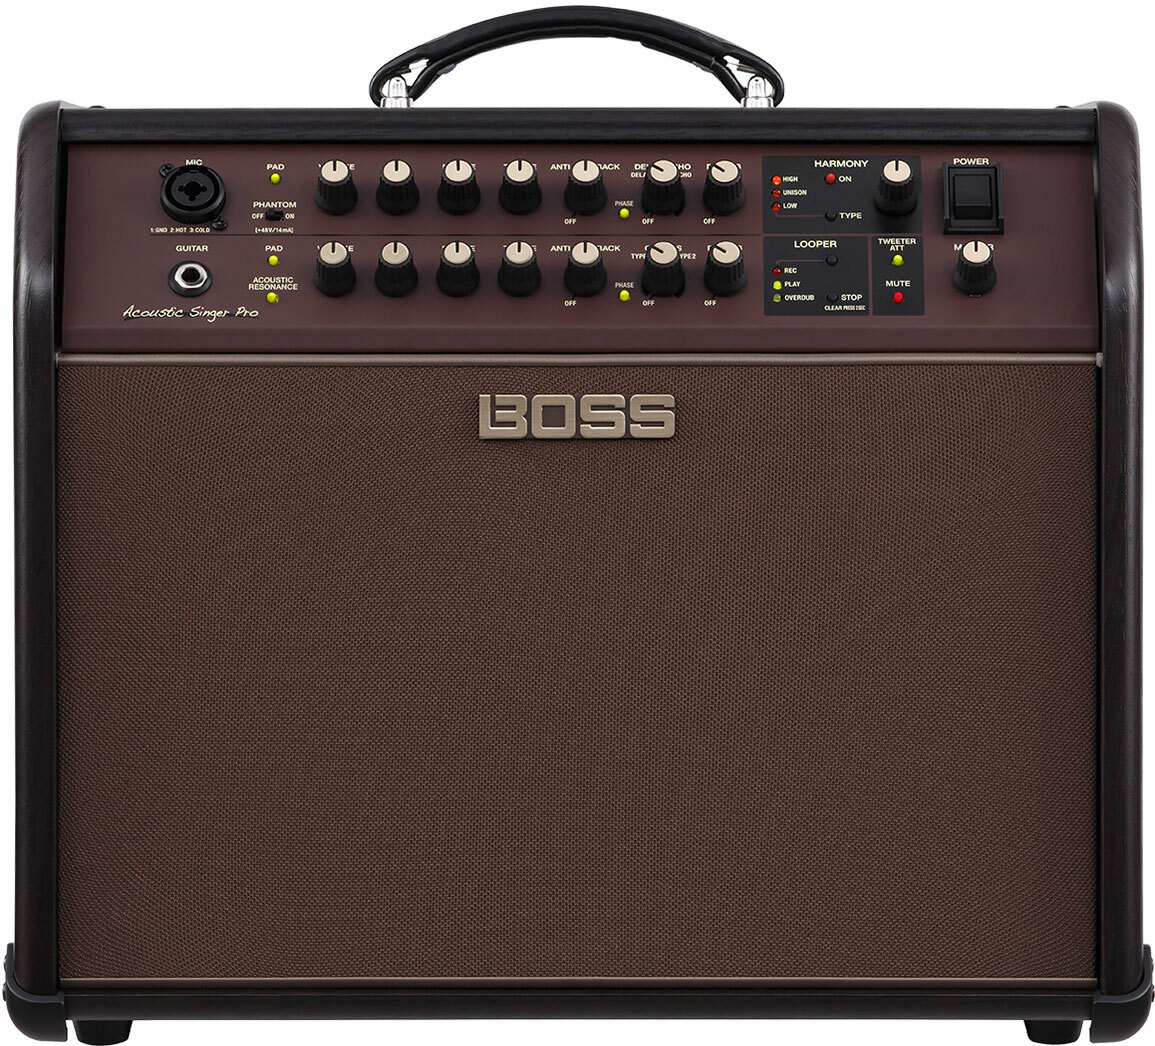 Boss Acoustic Singer Pro 120w 1x8 - Acoustic guitar combo amp - Main picture